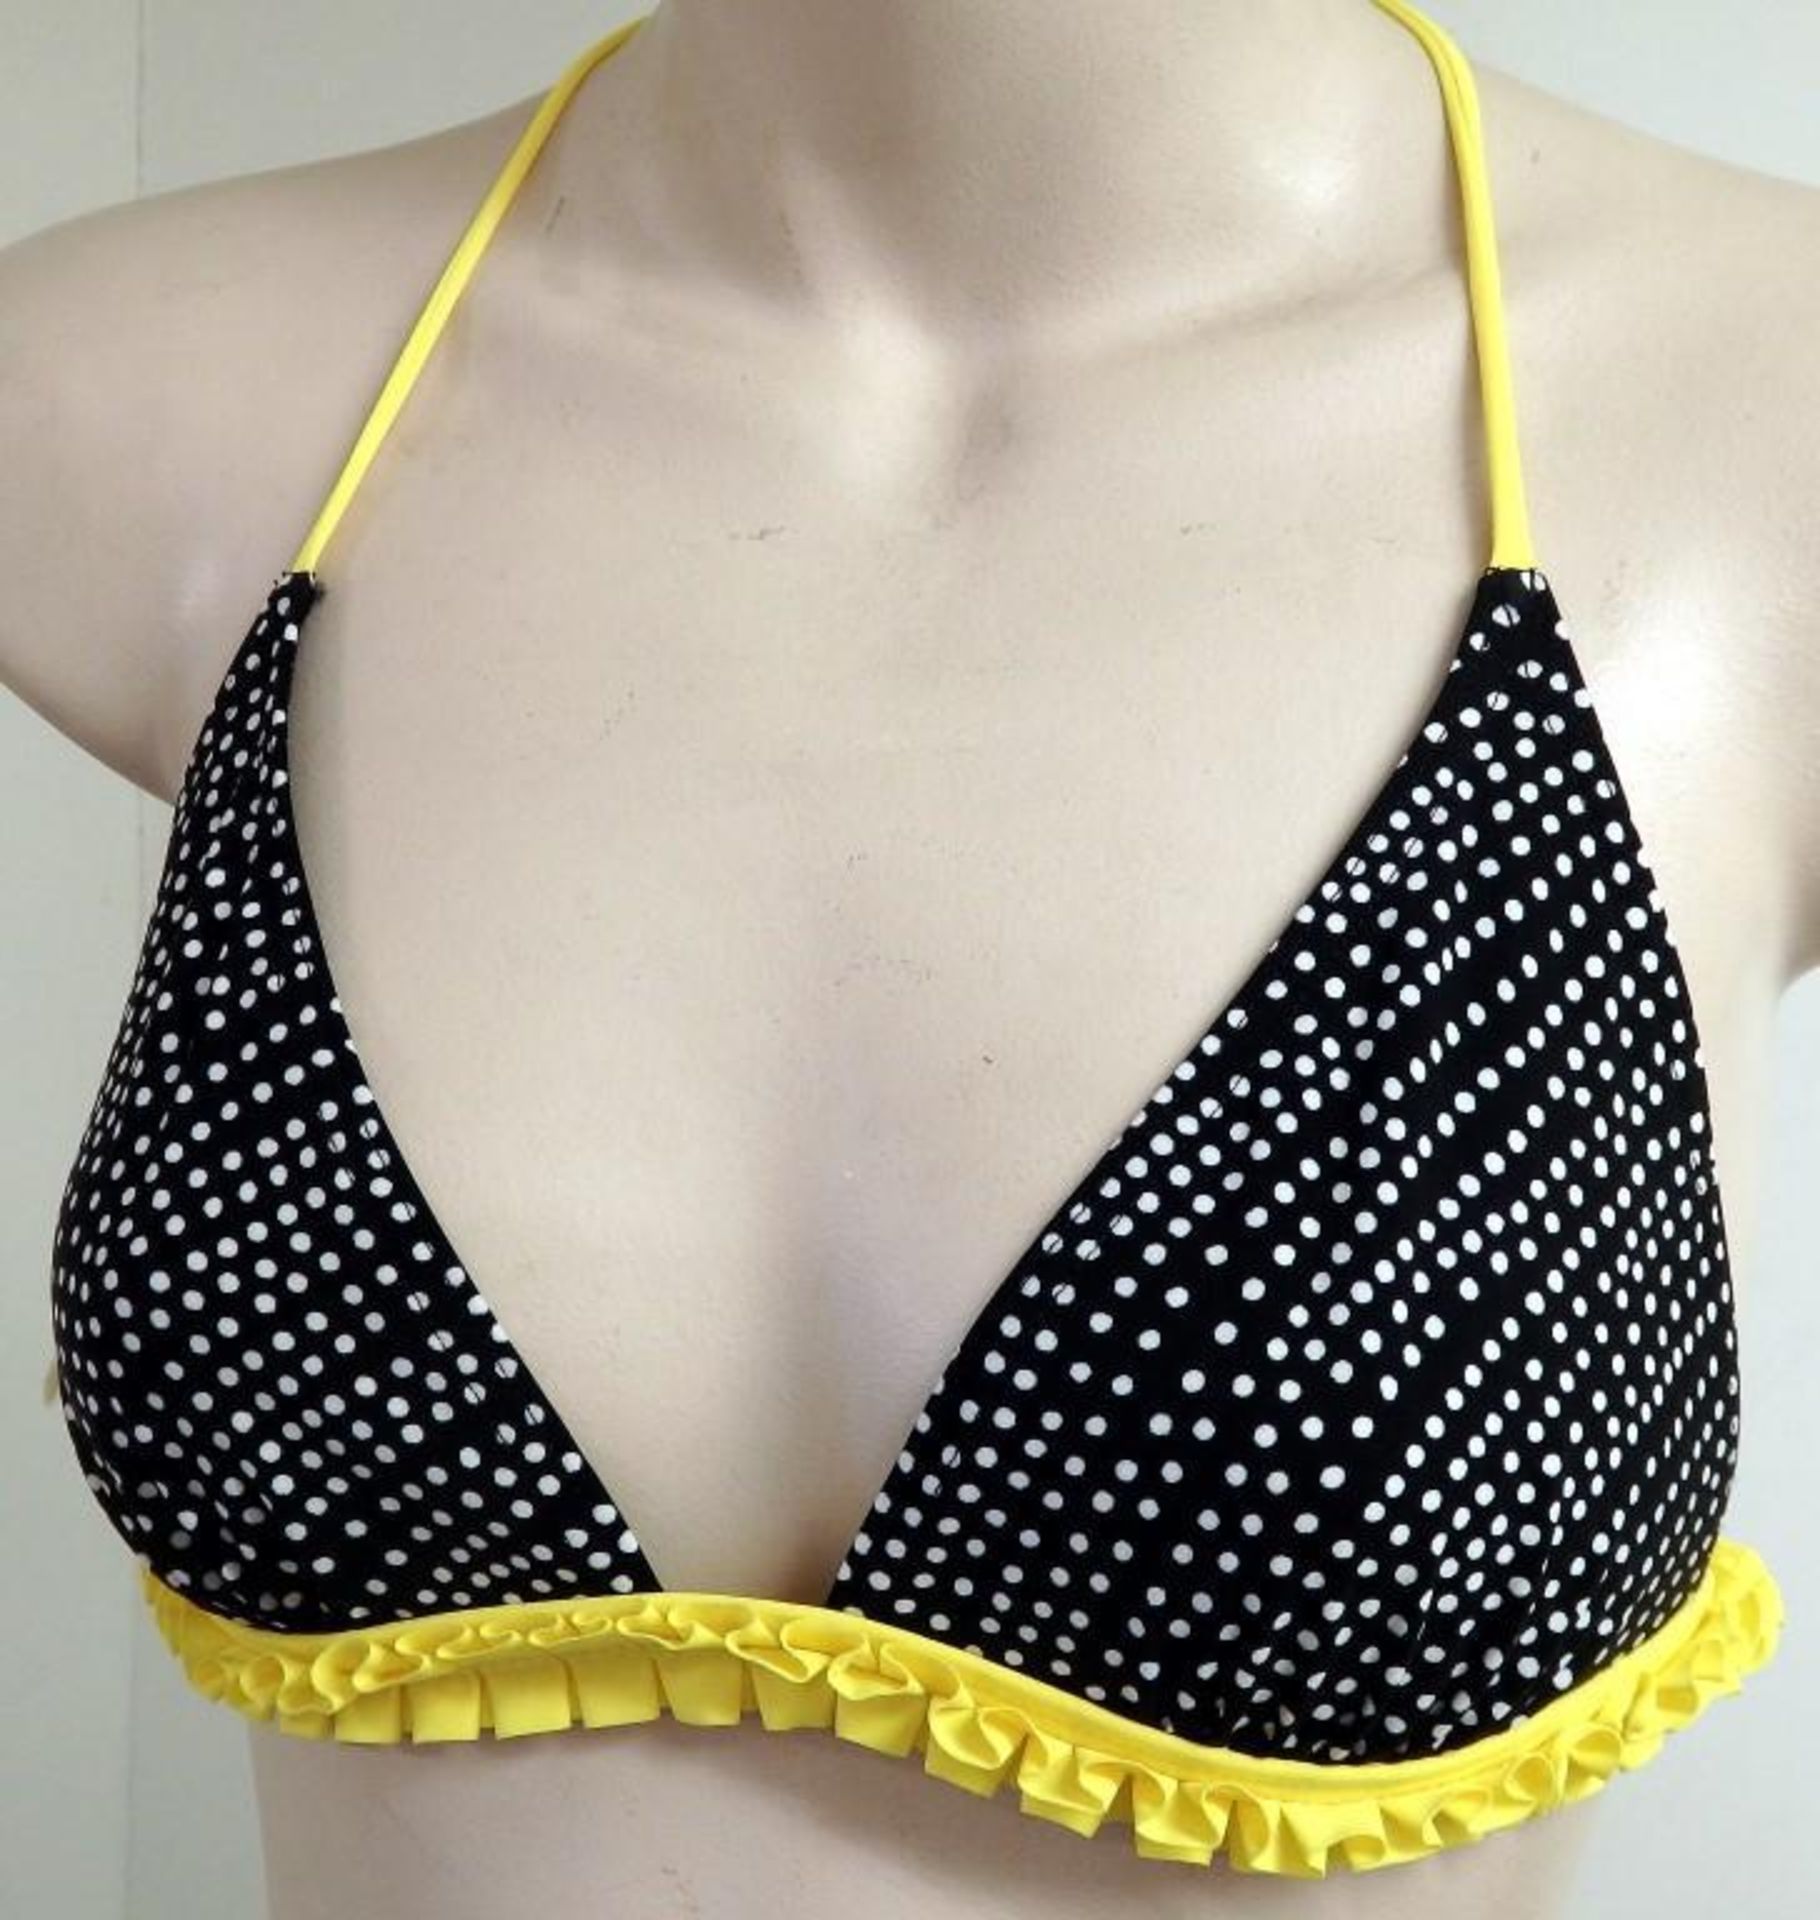 1 x Rasurel - Black Polka dot and Yellow Frill Gold Bikini - R21061 Touquet -Shorty - Size 2 - UK 32 - Image 2 of 9